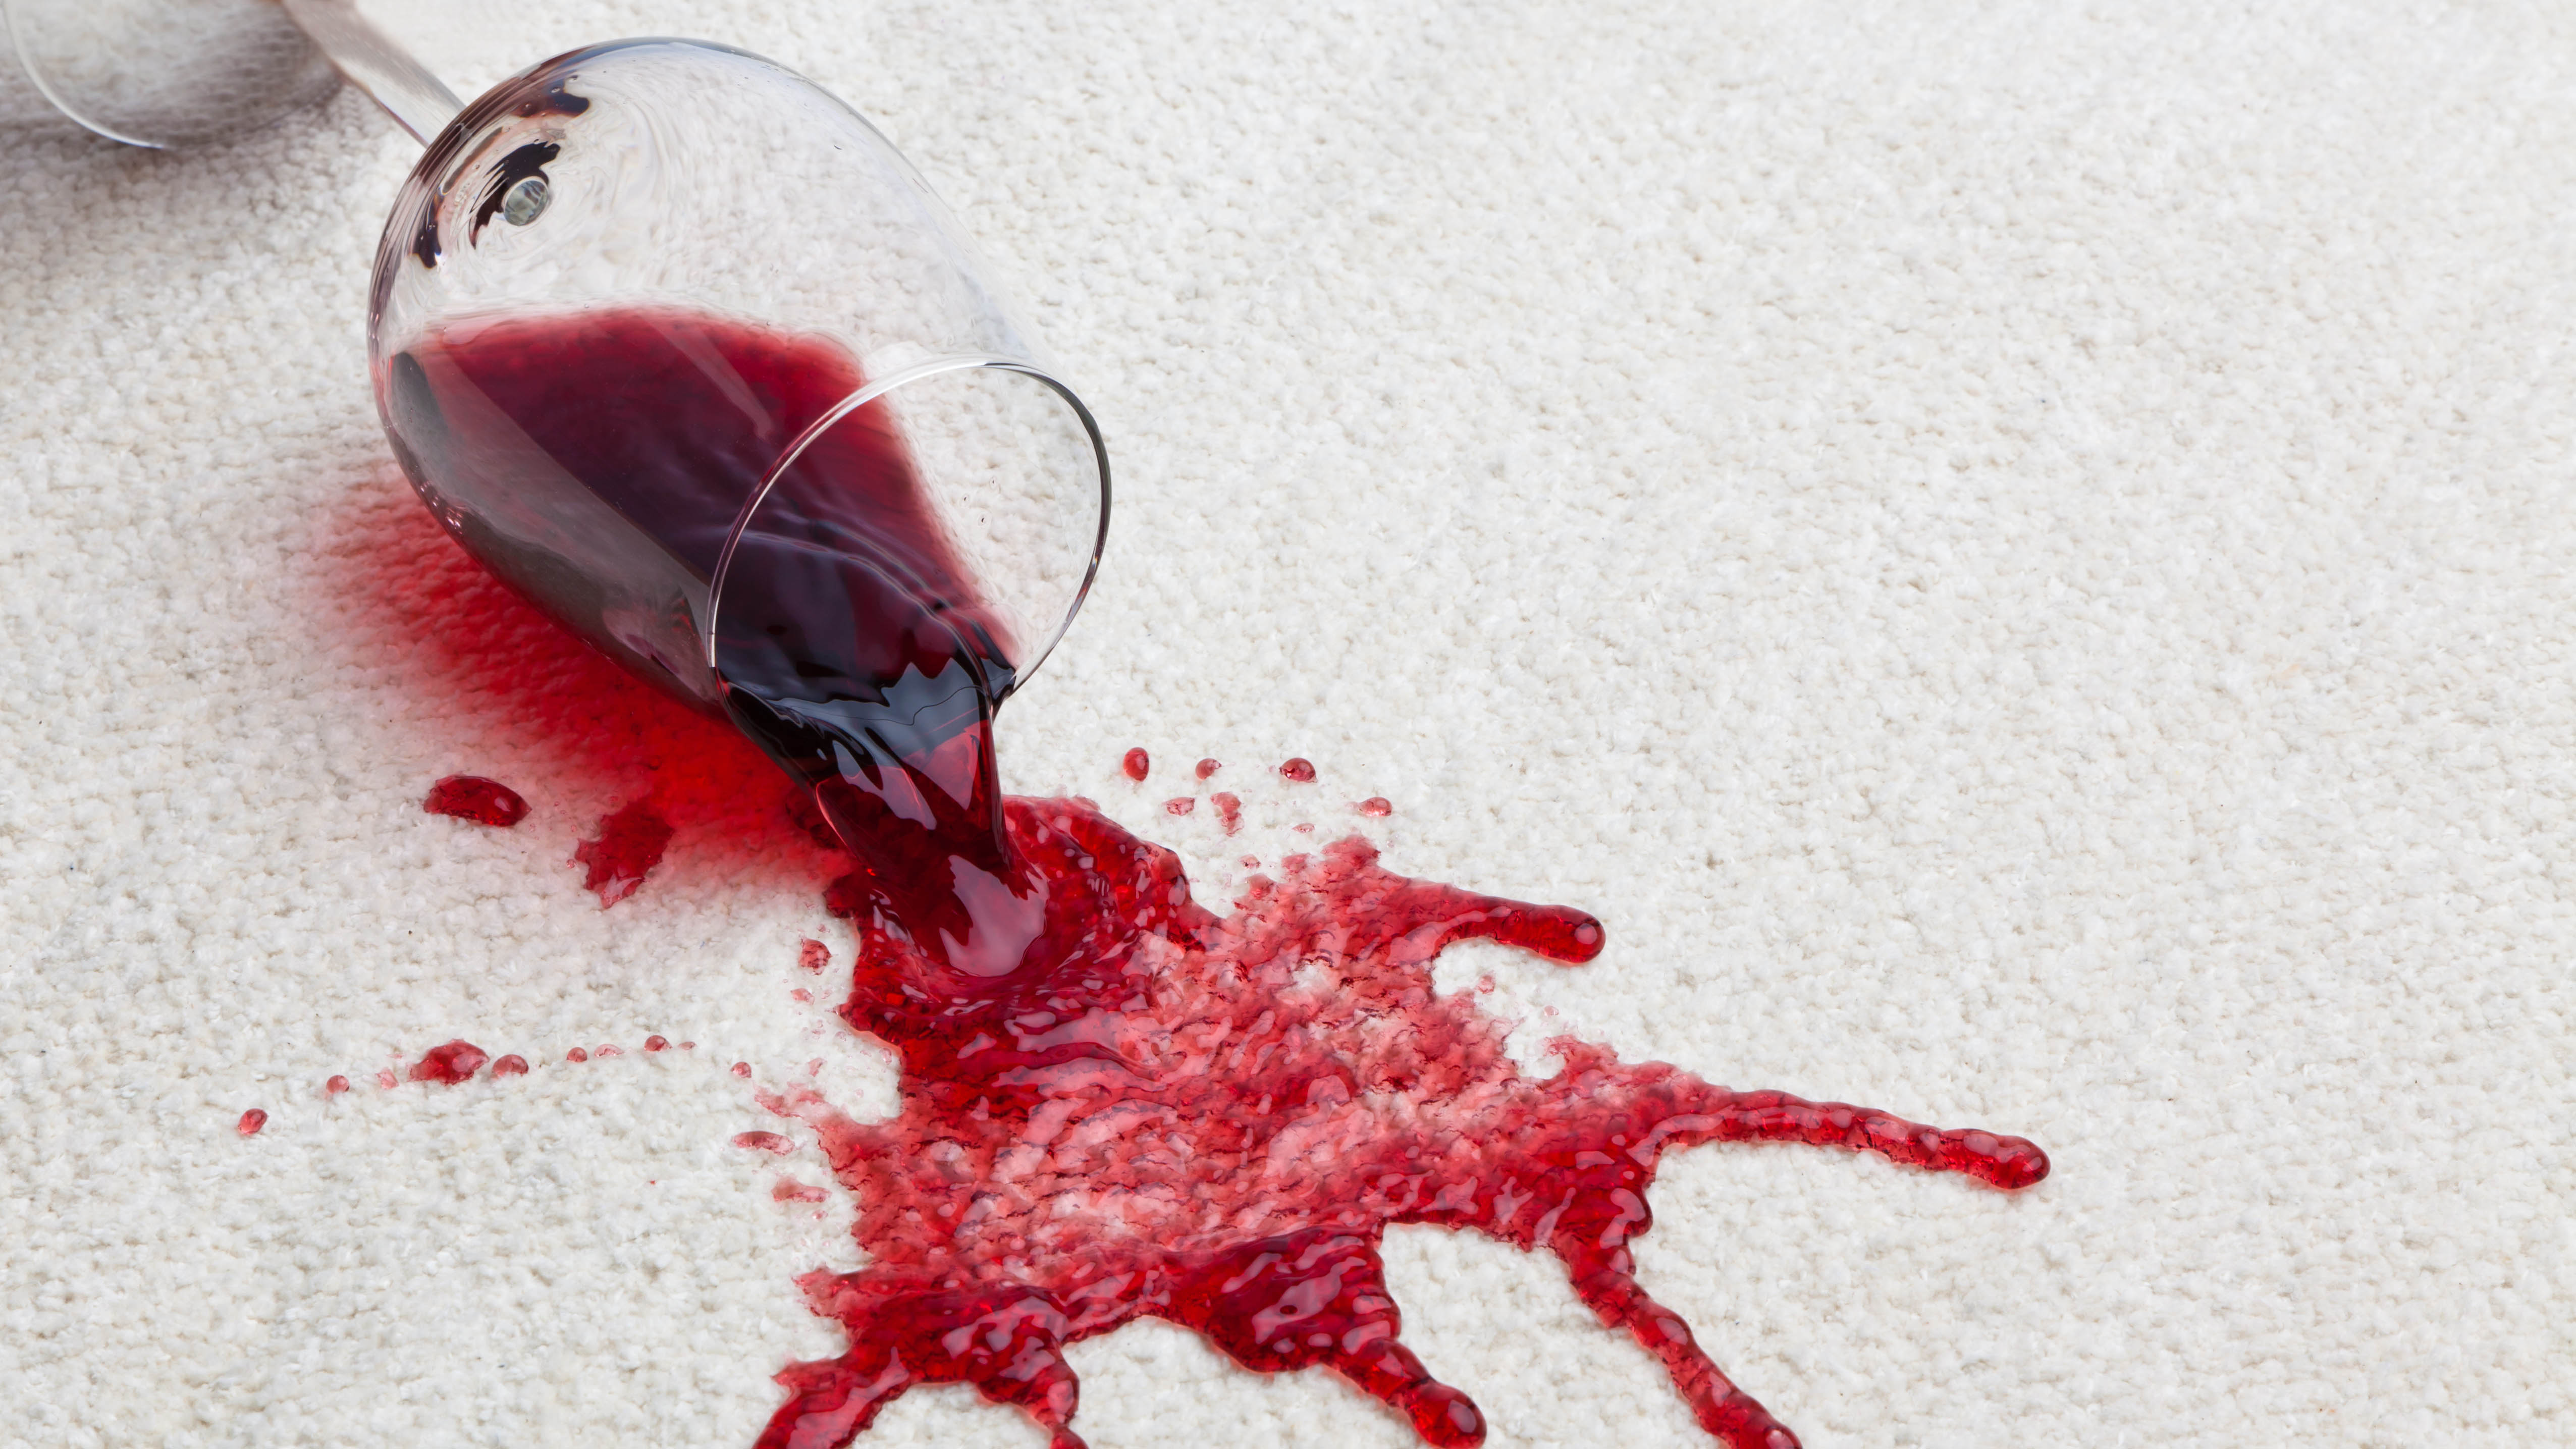 Red wine spilled on carpet